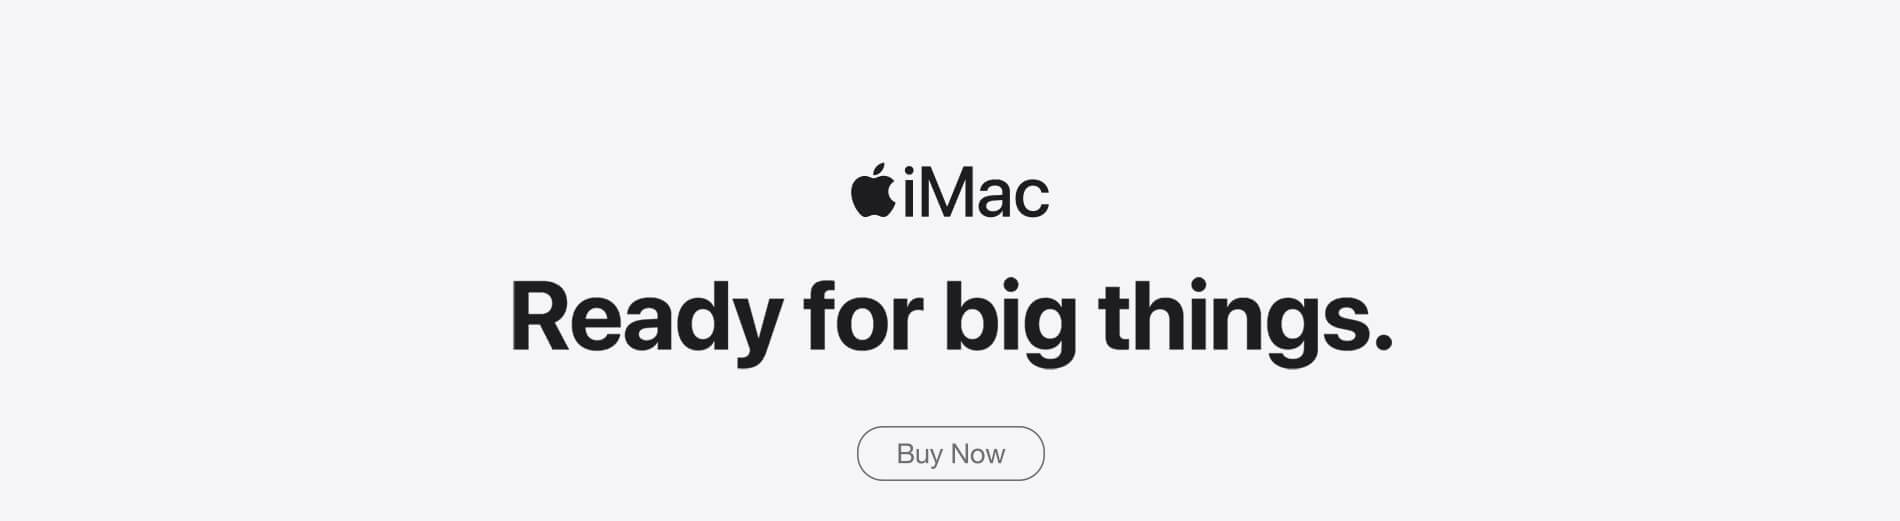 iMac. Ready for big things